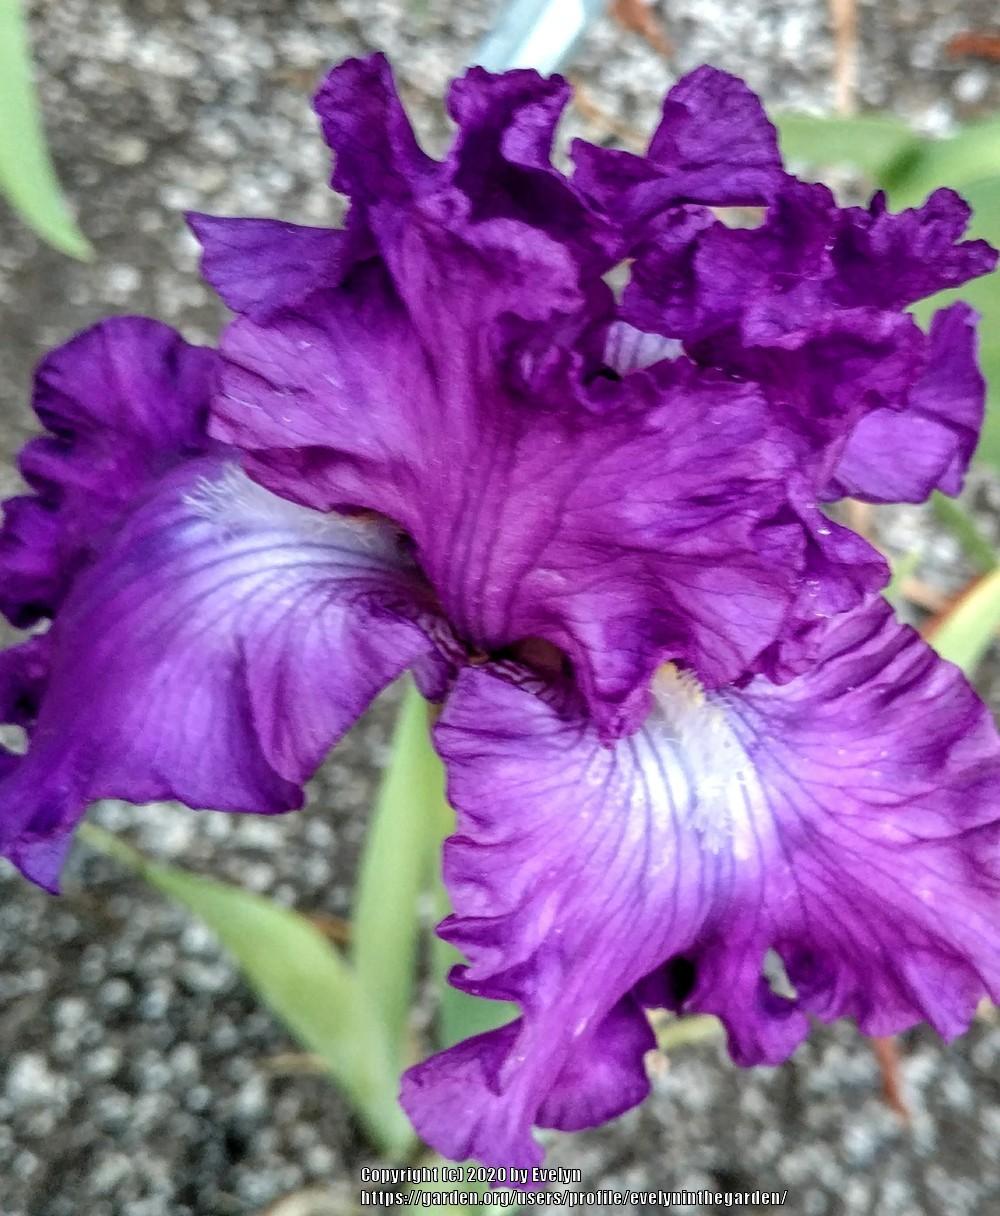 Photo of Tall Bearded Iris (Iris 'Aristocracy') uploaded by evelyninthegarden